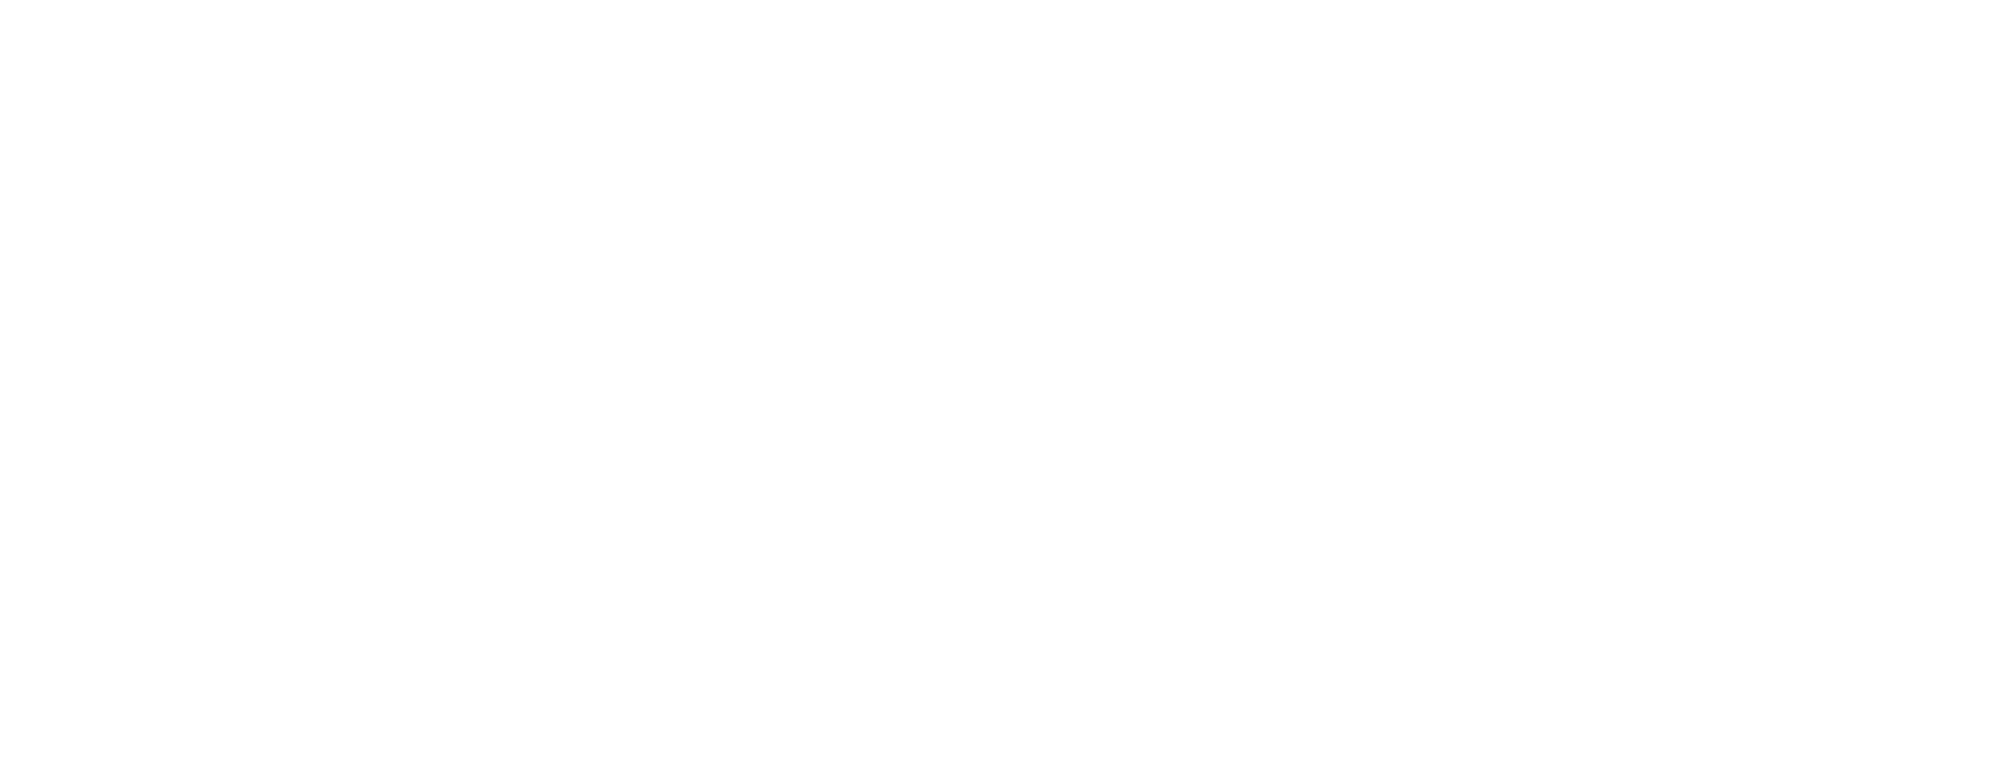 OpenFF Toolkit 0.14.5+4.g9b23790.dirty documentation logo